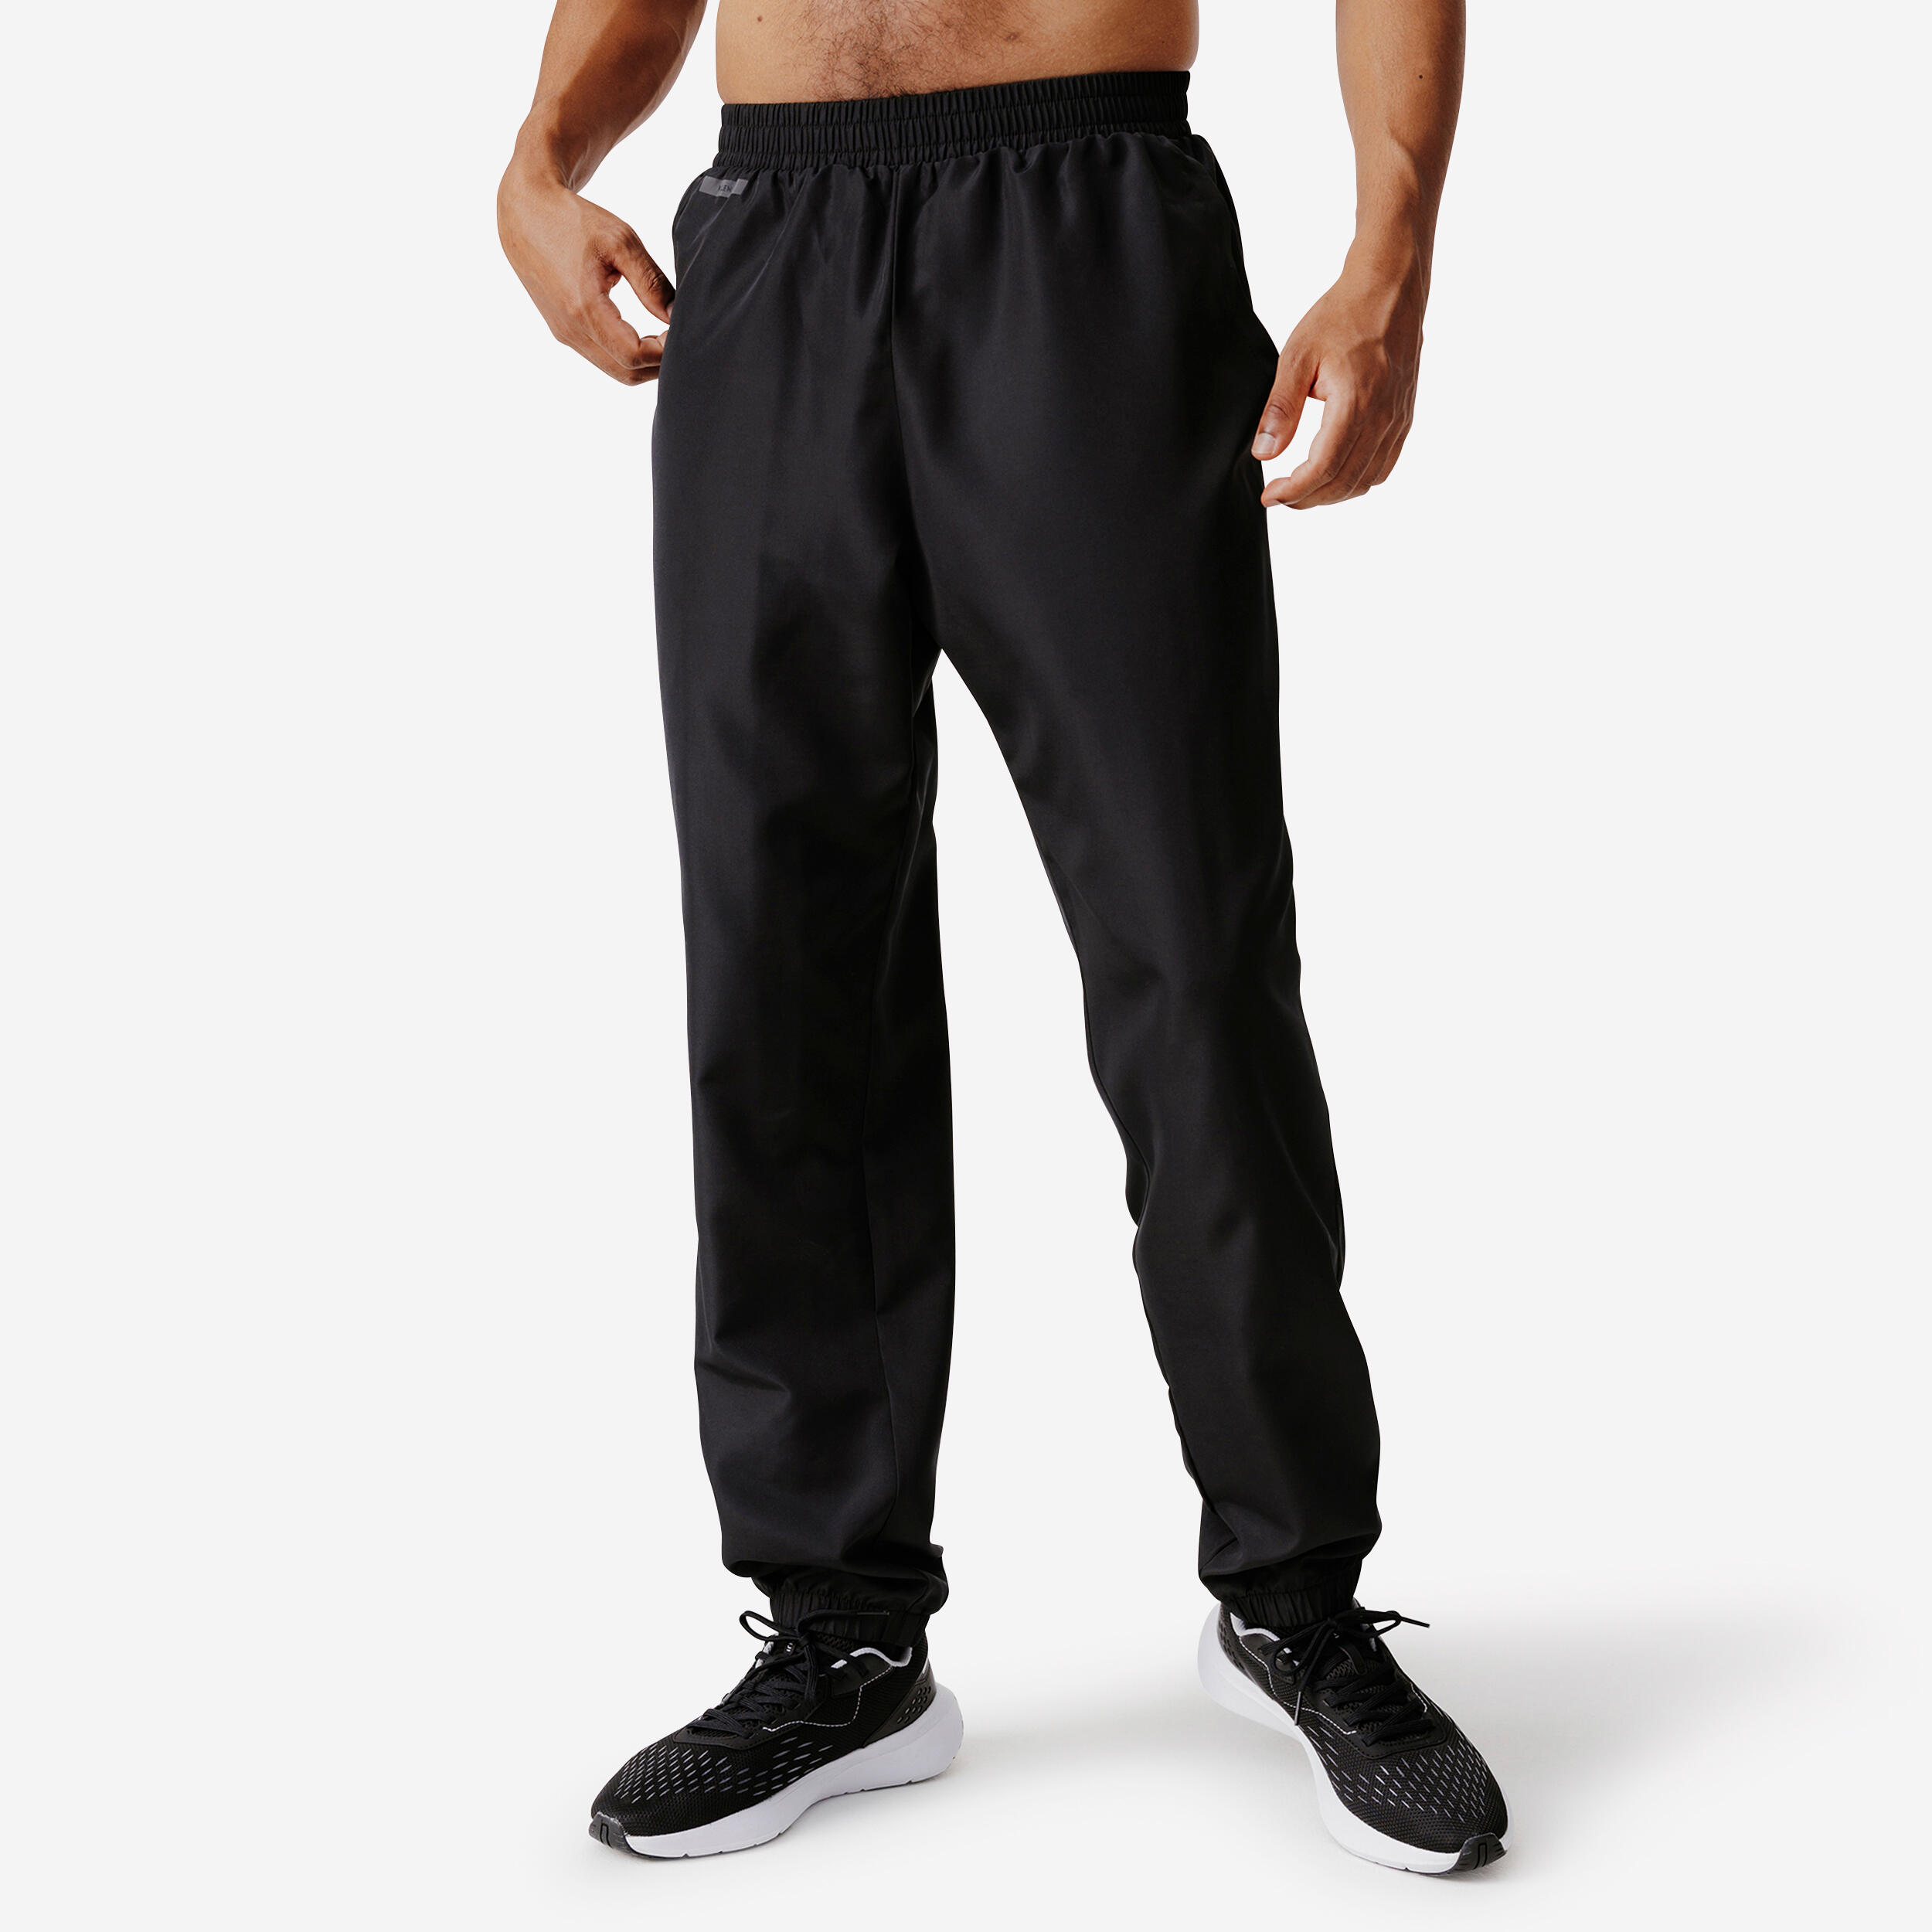 Men's Dry 100 breathable running trousers - black 1/4